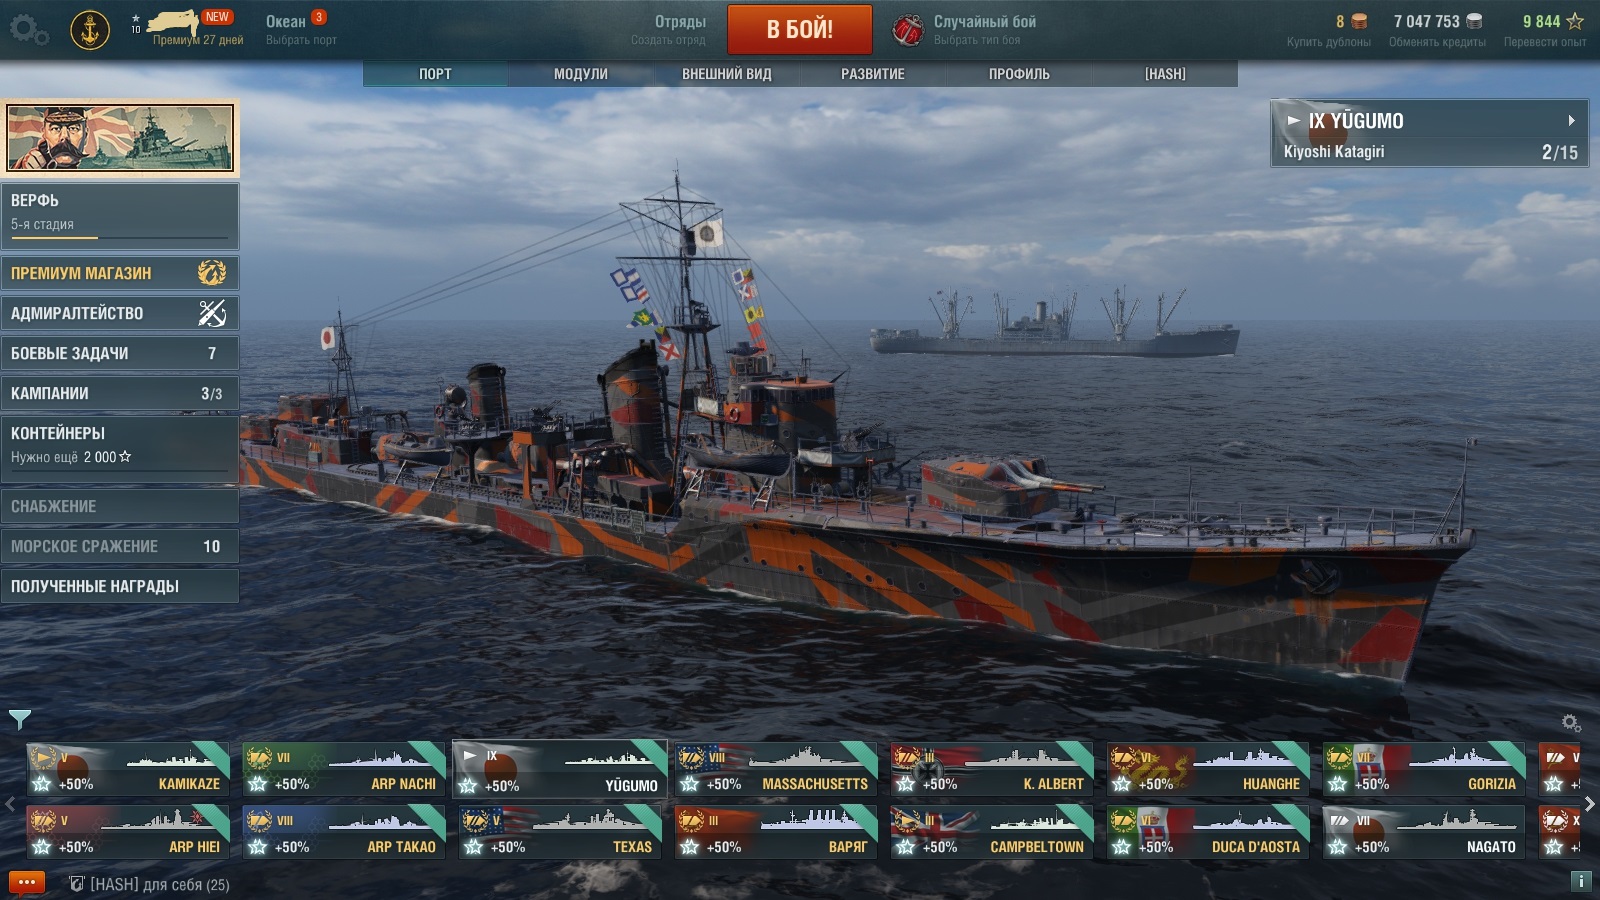 Аккаунты world of warships. Скриншот 5 уровня в World of Warships. World of Warships Скриншоты. Ворлд оф варшипс меню. Уровни кораблей в World of Warships.